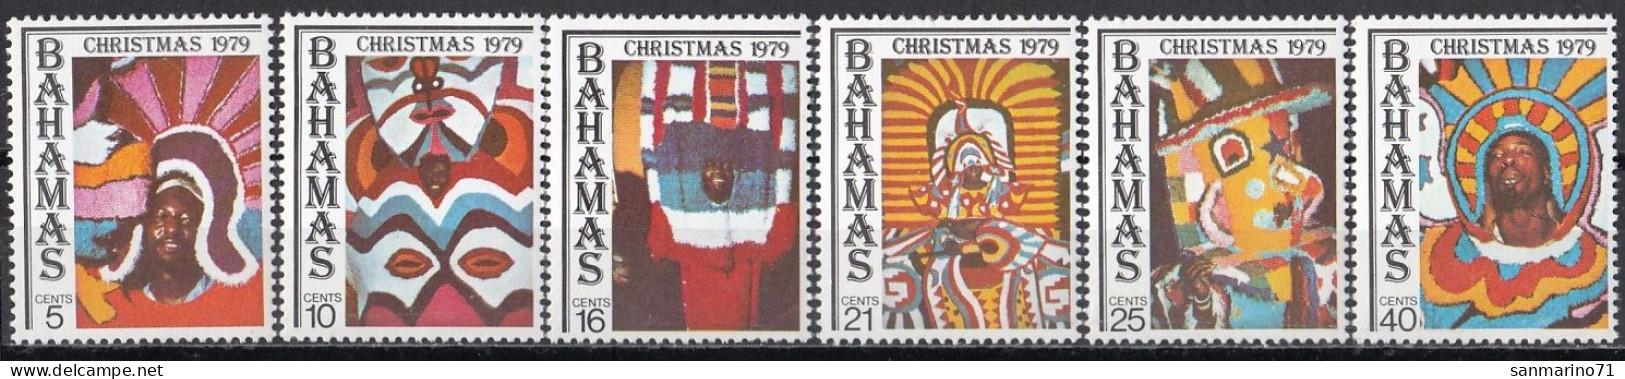 BAHAMAS 448-453,unused,Christmas 1979 (**) - Bahamas (1973-...)